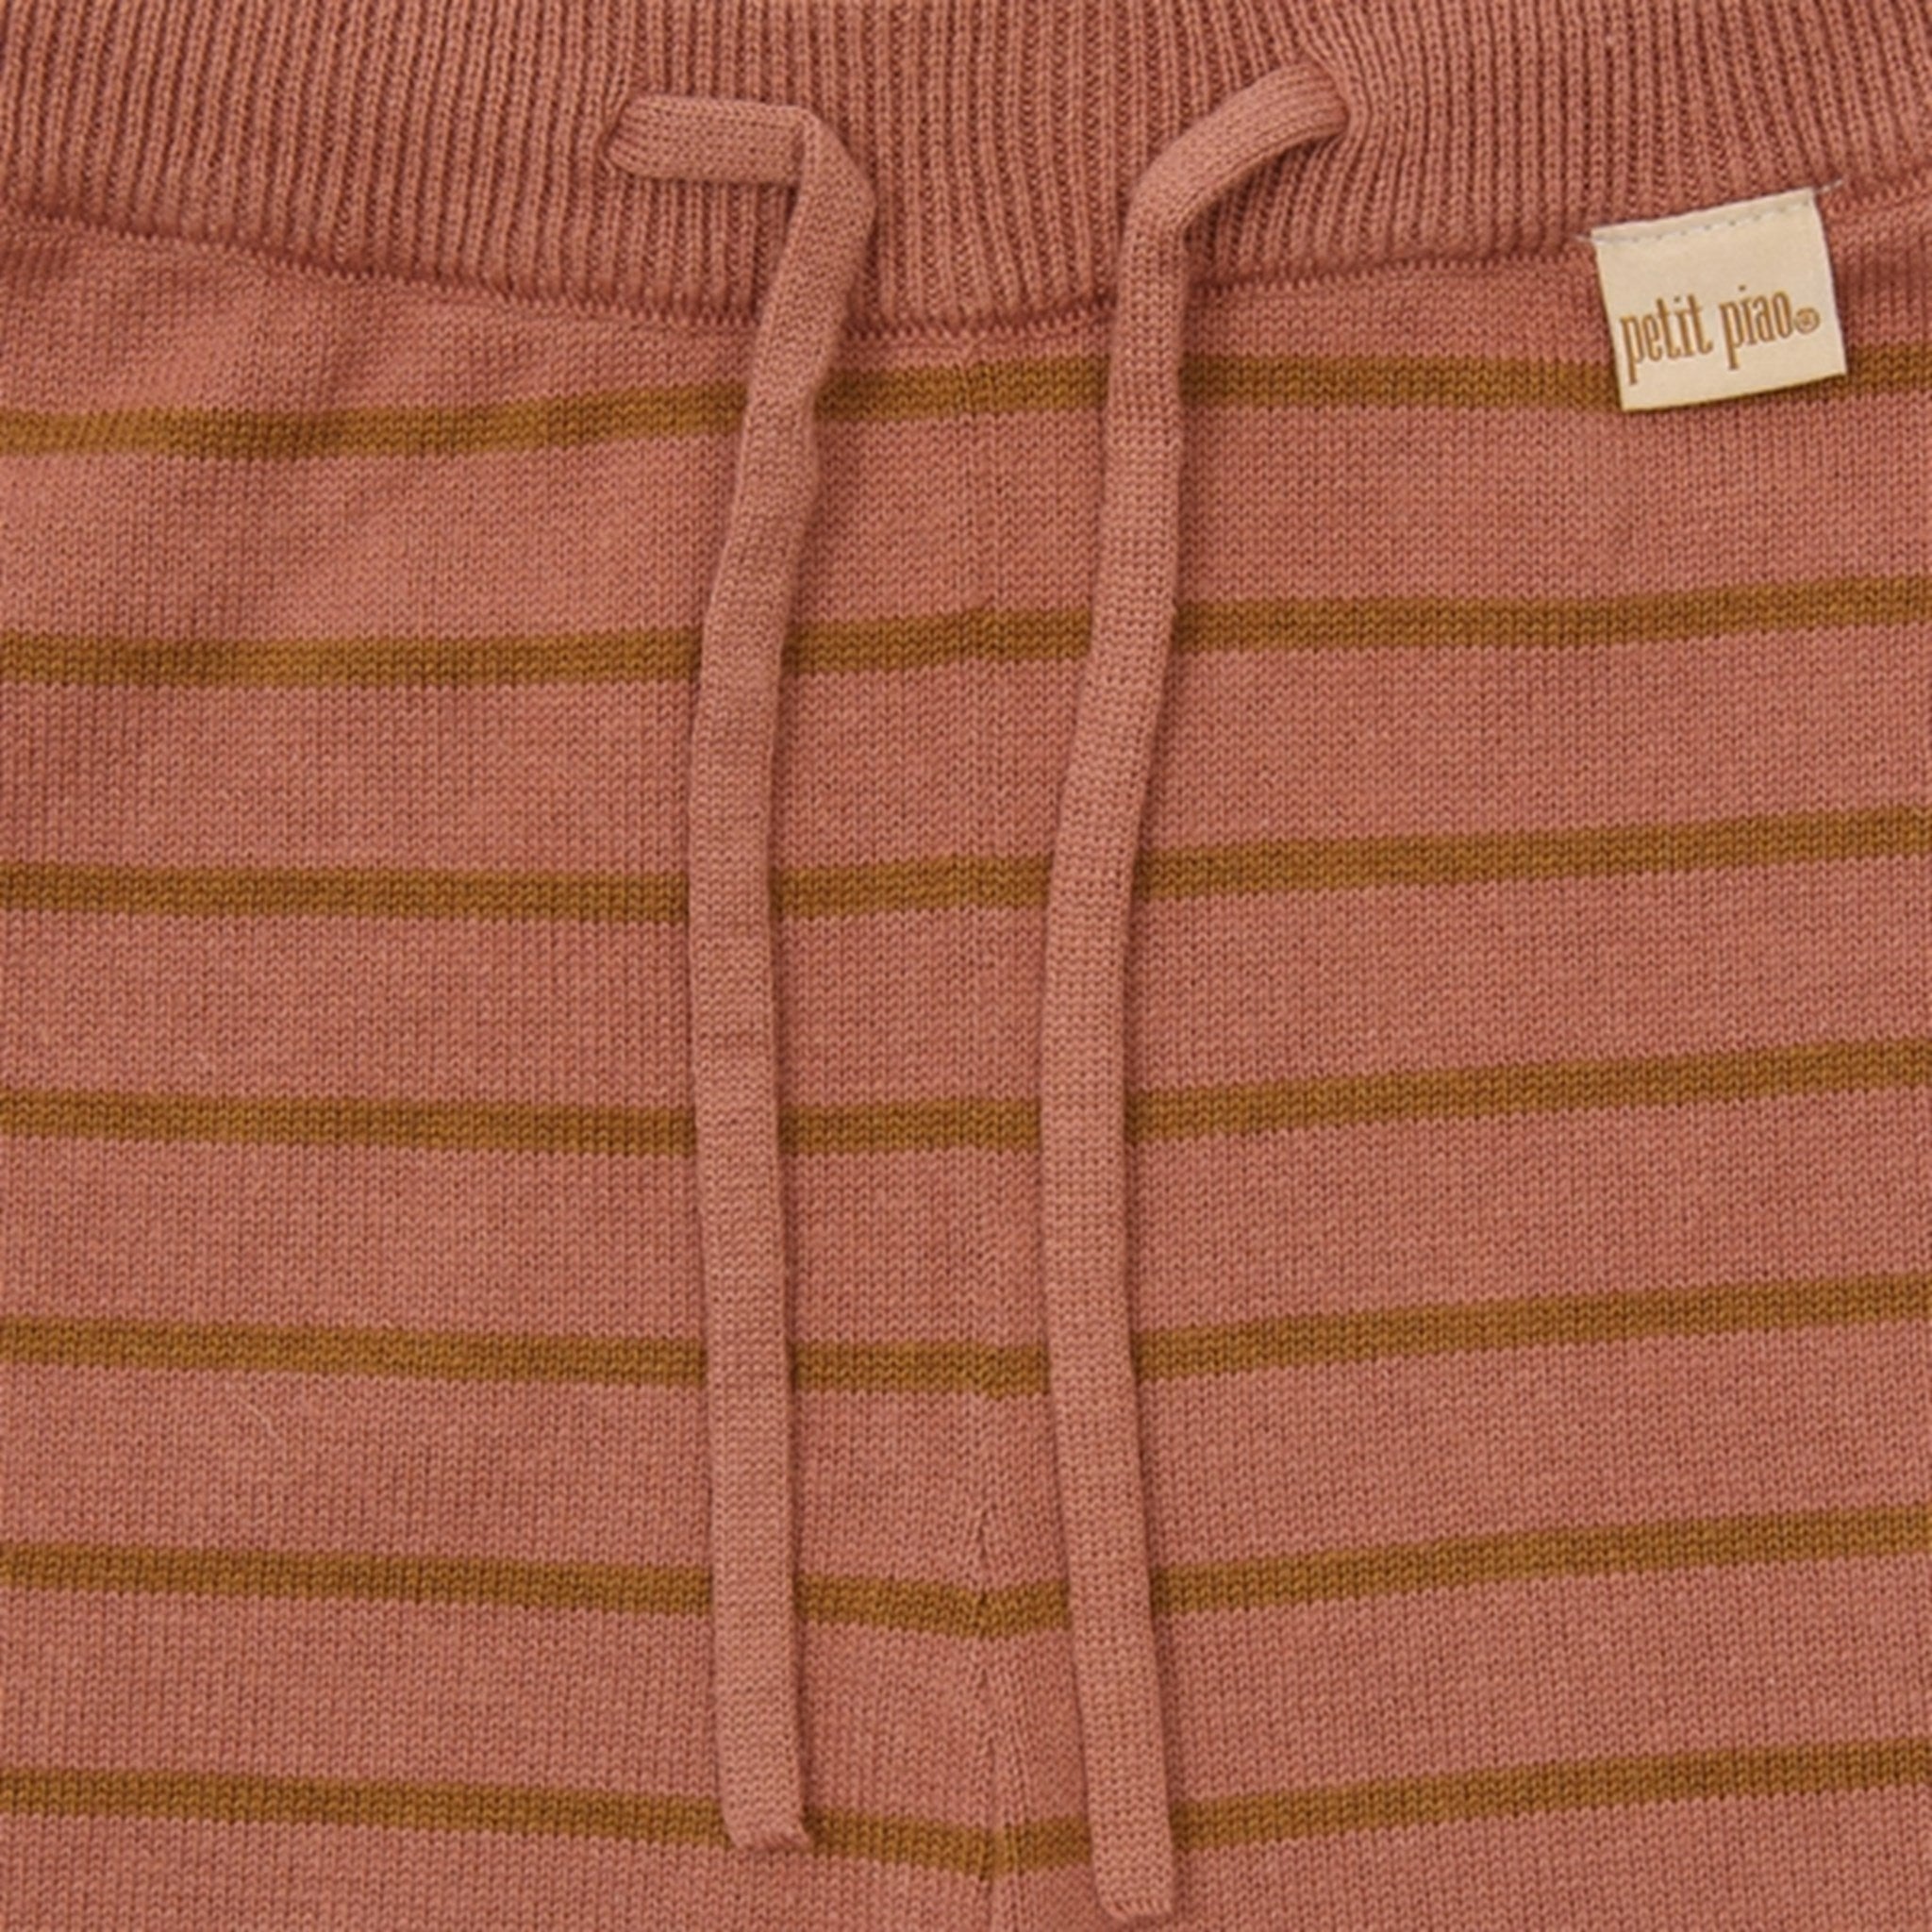 Petit Piao Copper Brown/Rubber Striped Knit Pants 2